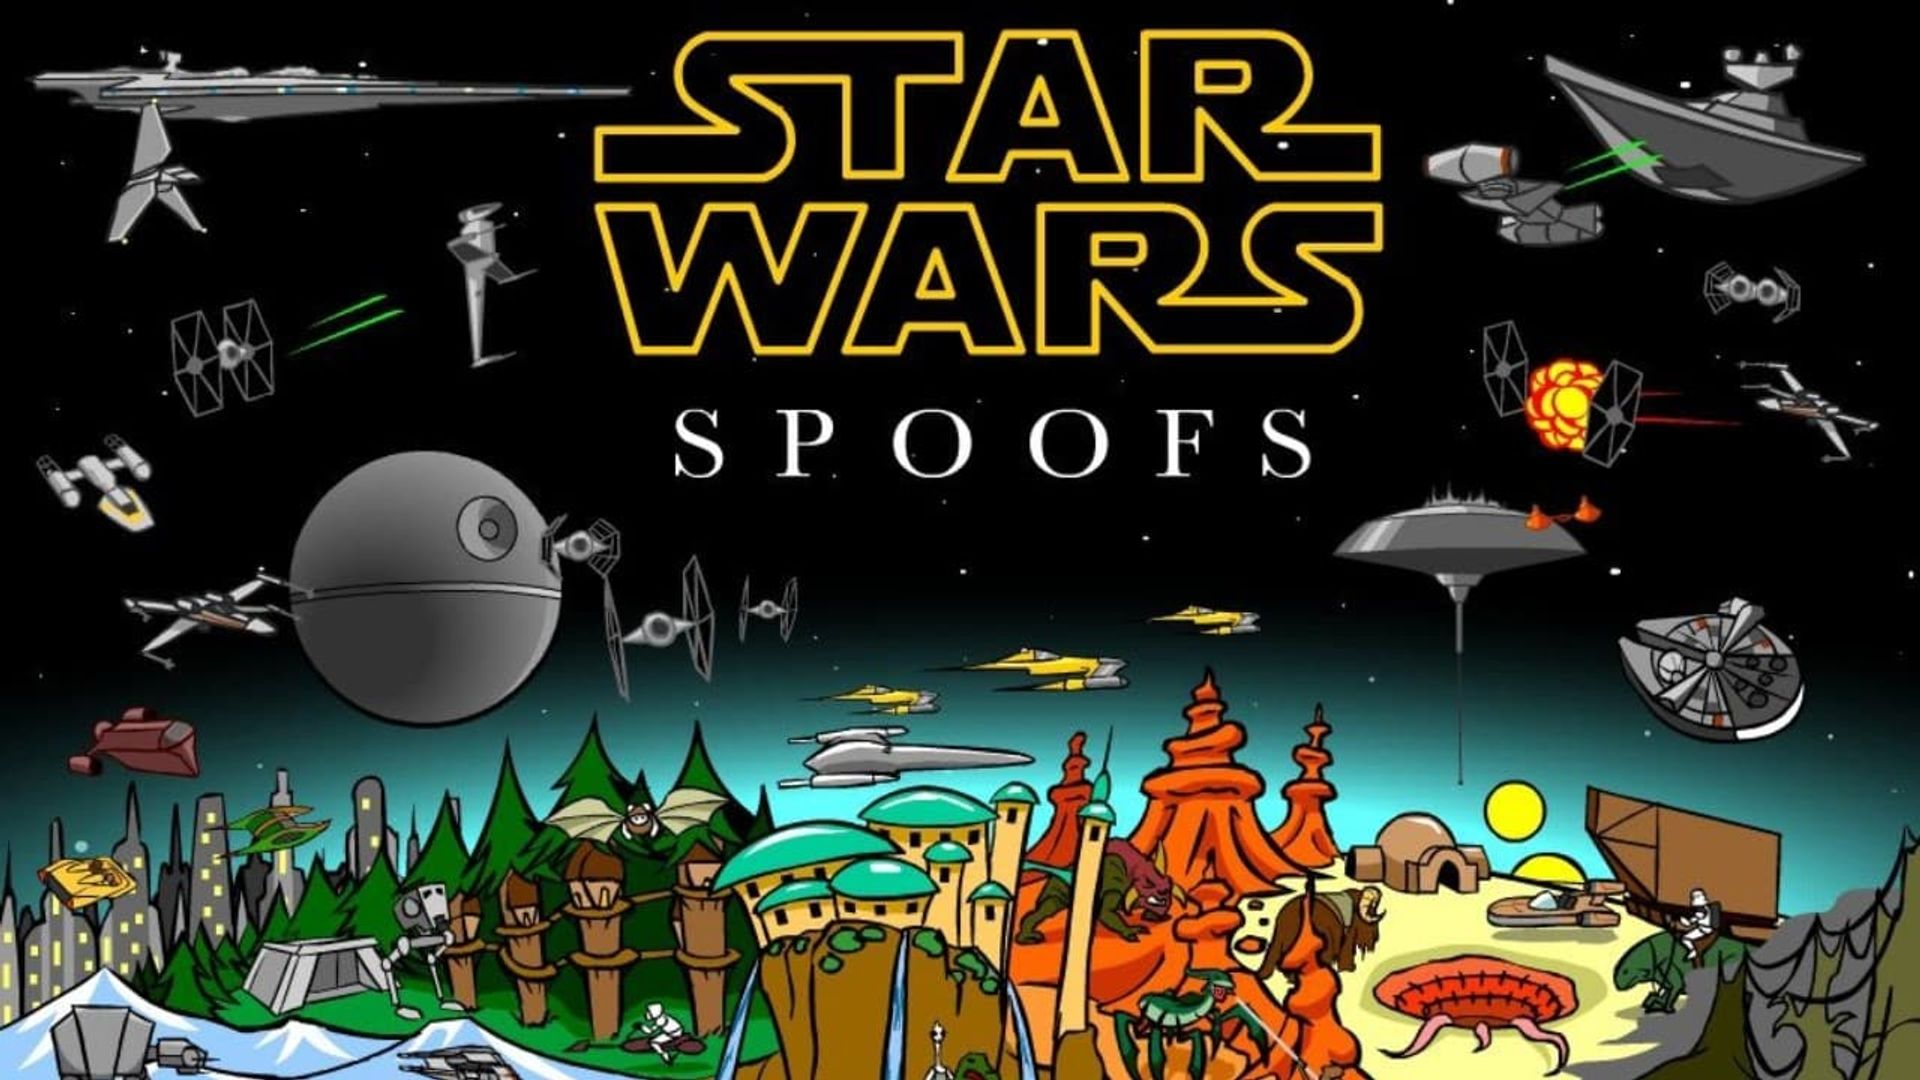 Star Wars Spoofs background